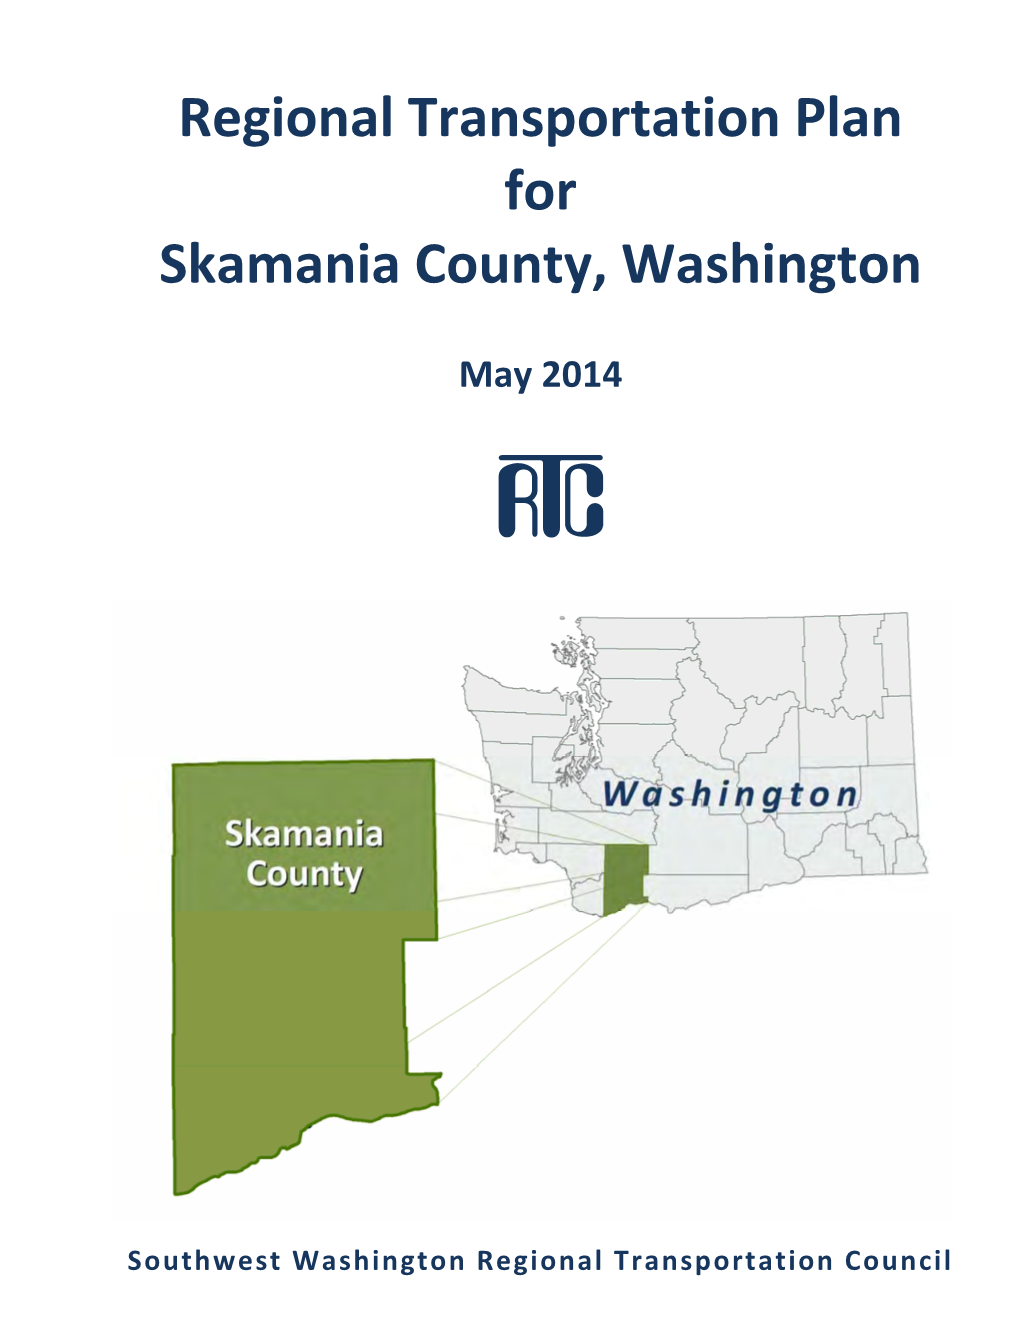 Regional Transportation Plan for Skamania County, Washington